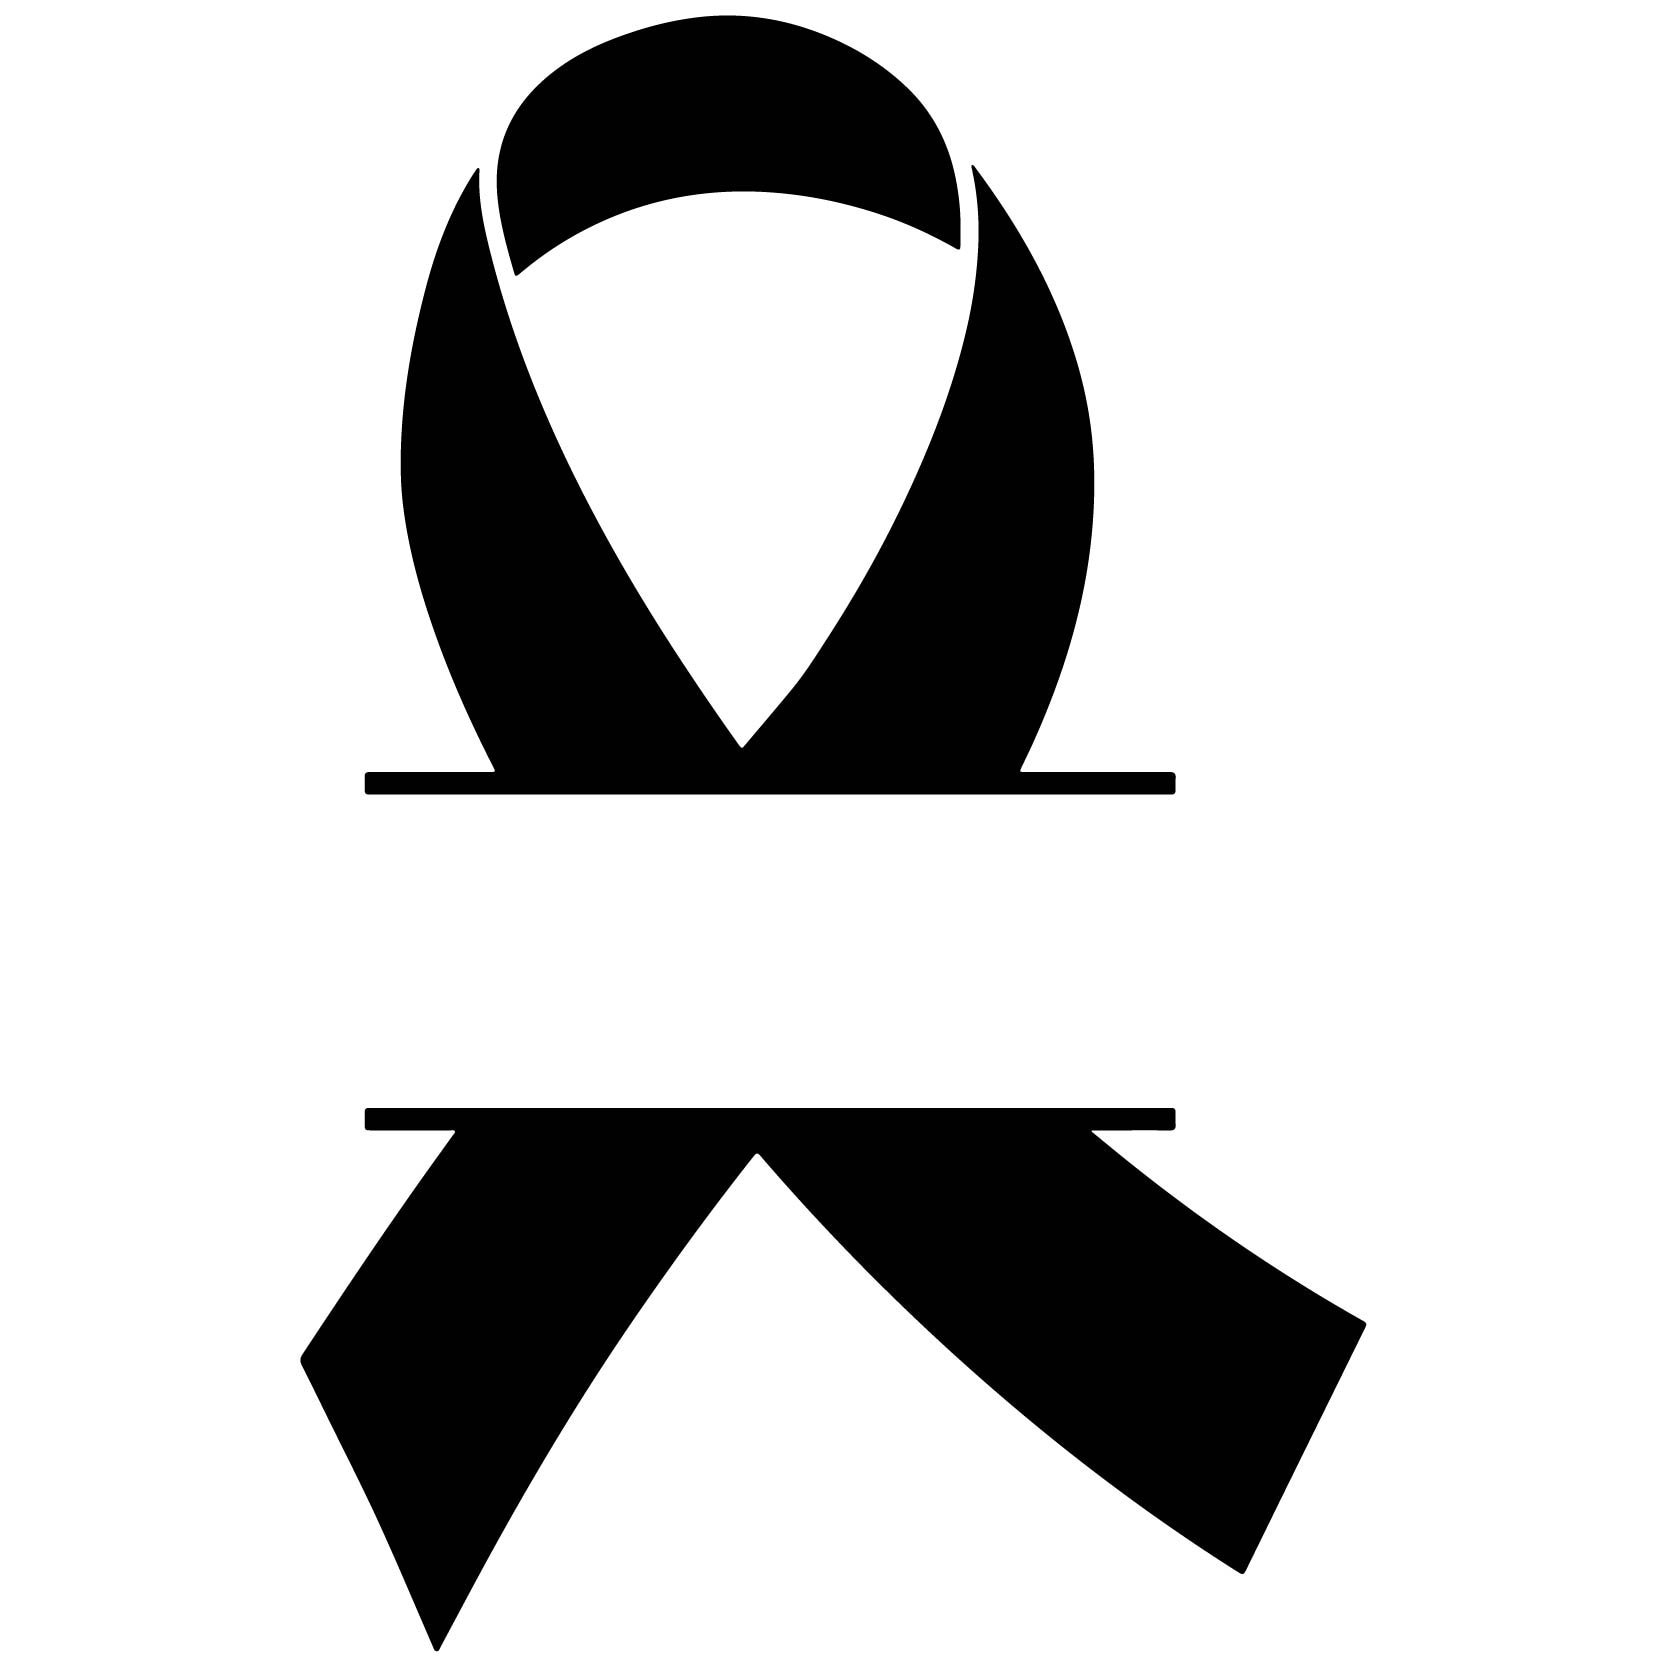 File:Black awareness ribbon icon symmetrical.svg - Wikipedia